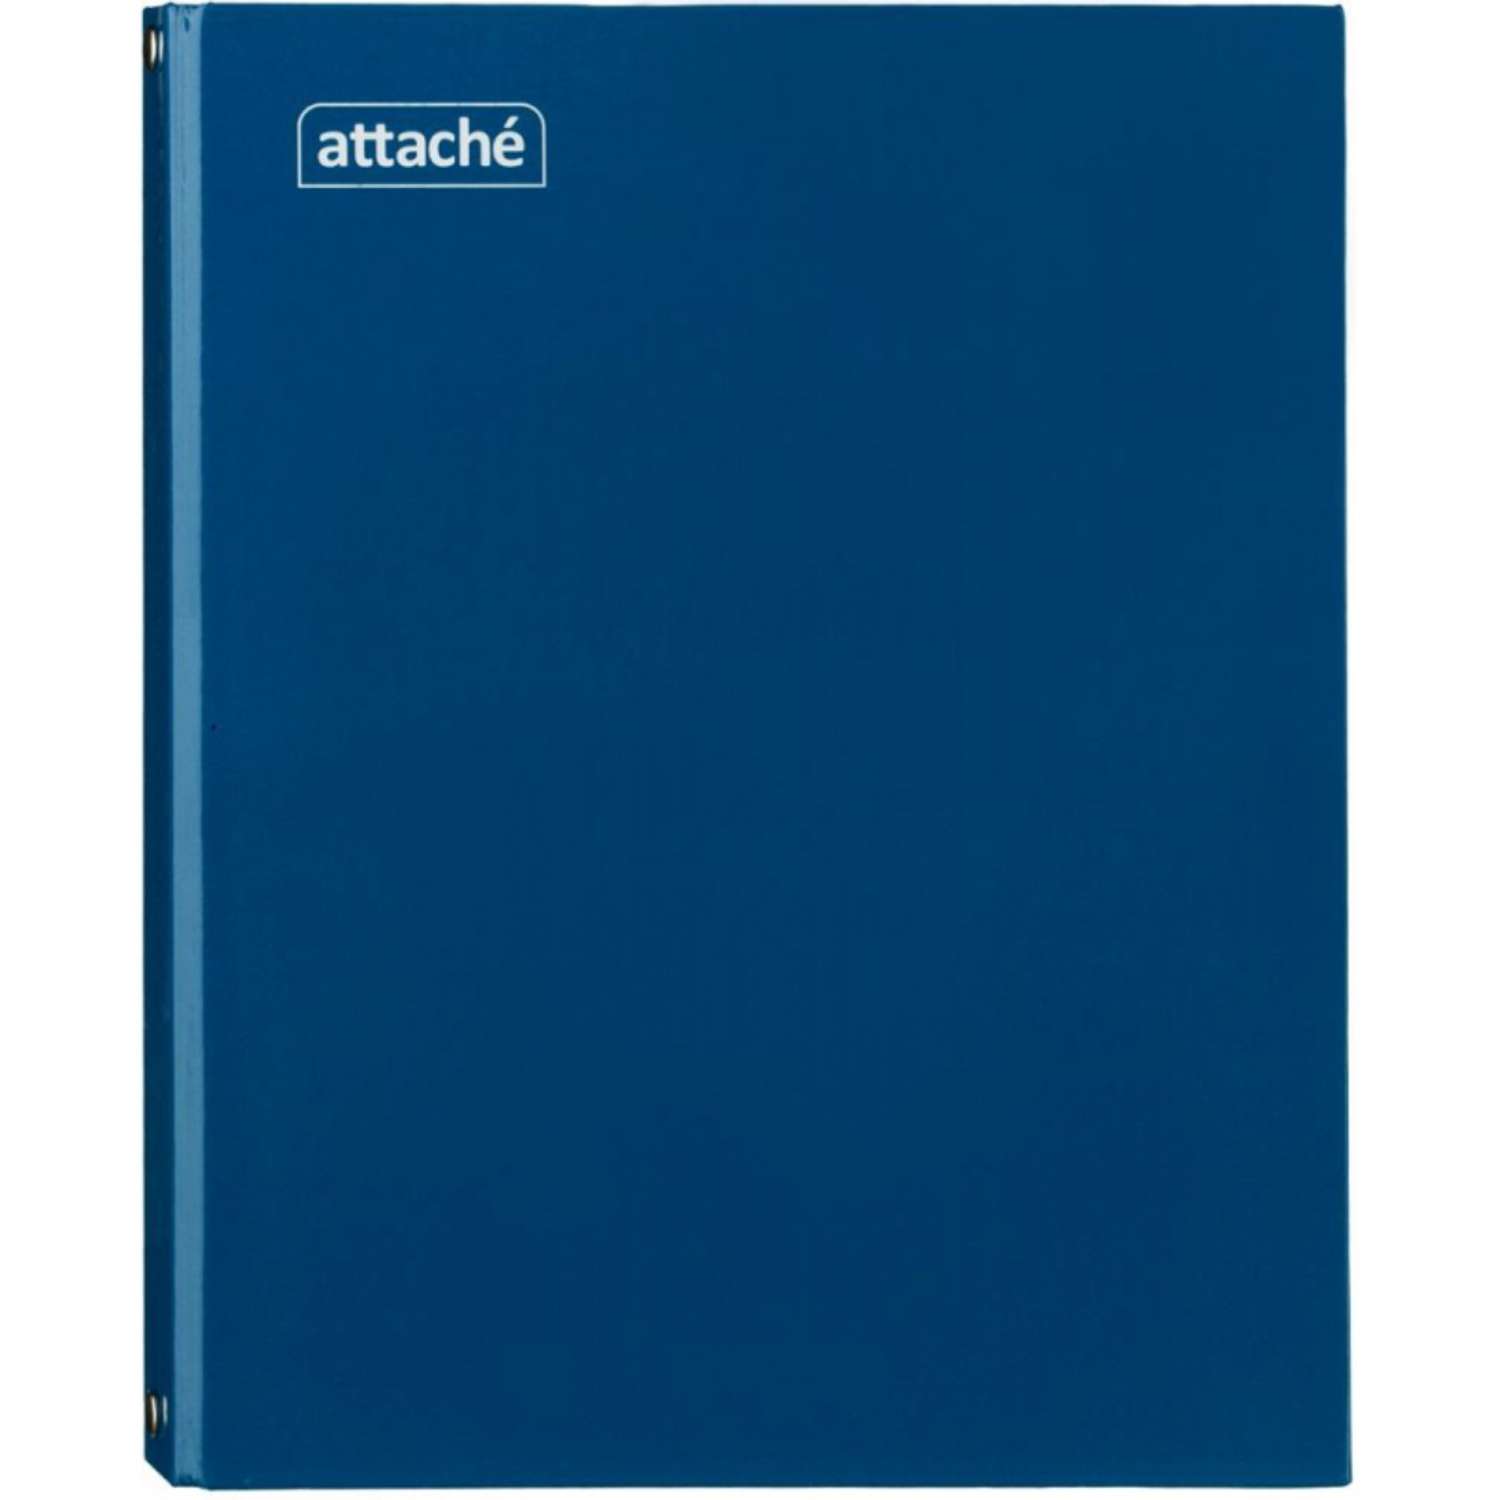 Бизнес-тетрадь Attache А5 80 листов на кольцах синий обложка 7БЦ 2 шт - фото 1